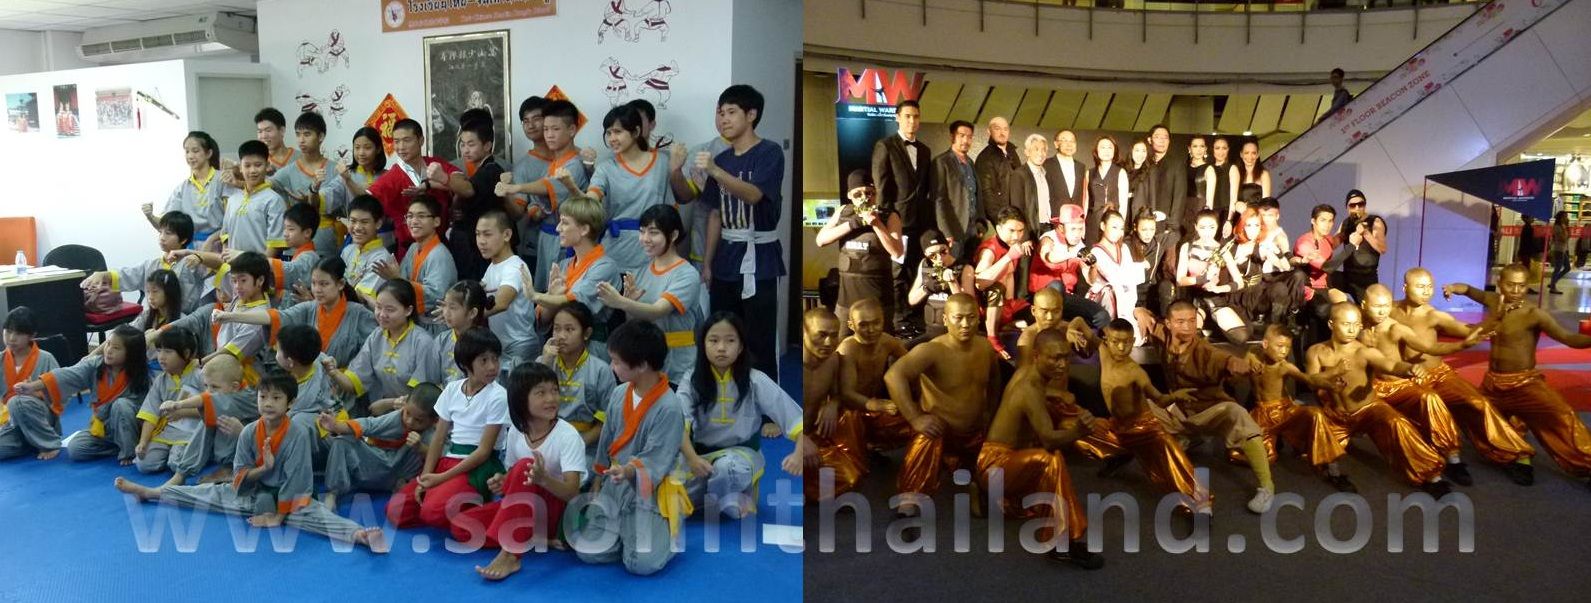 Thai-Chinese Shaolin Kungfu School Students / นักแสดง โรงเรียนไทย-จีนเส้าหลินกังฟู